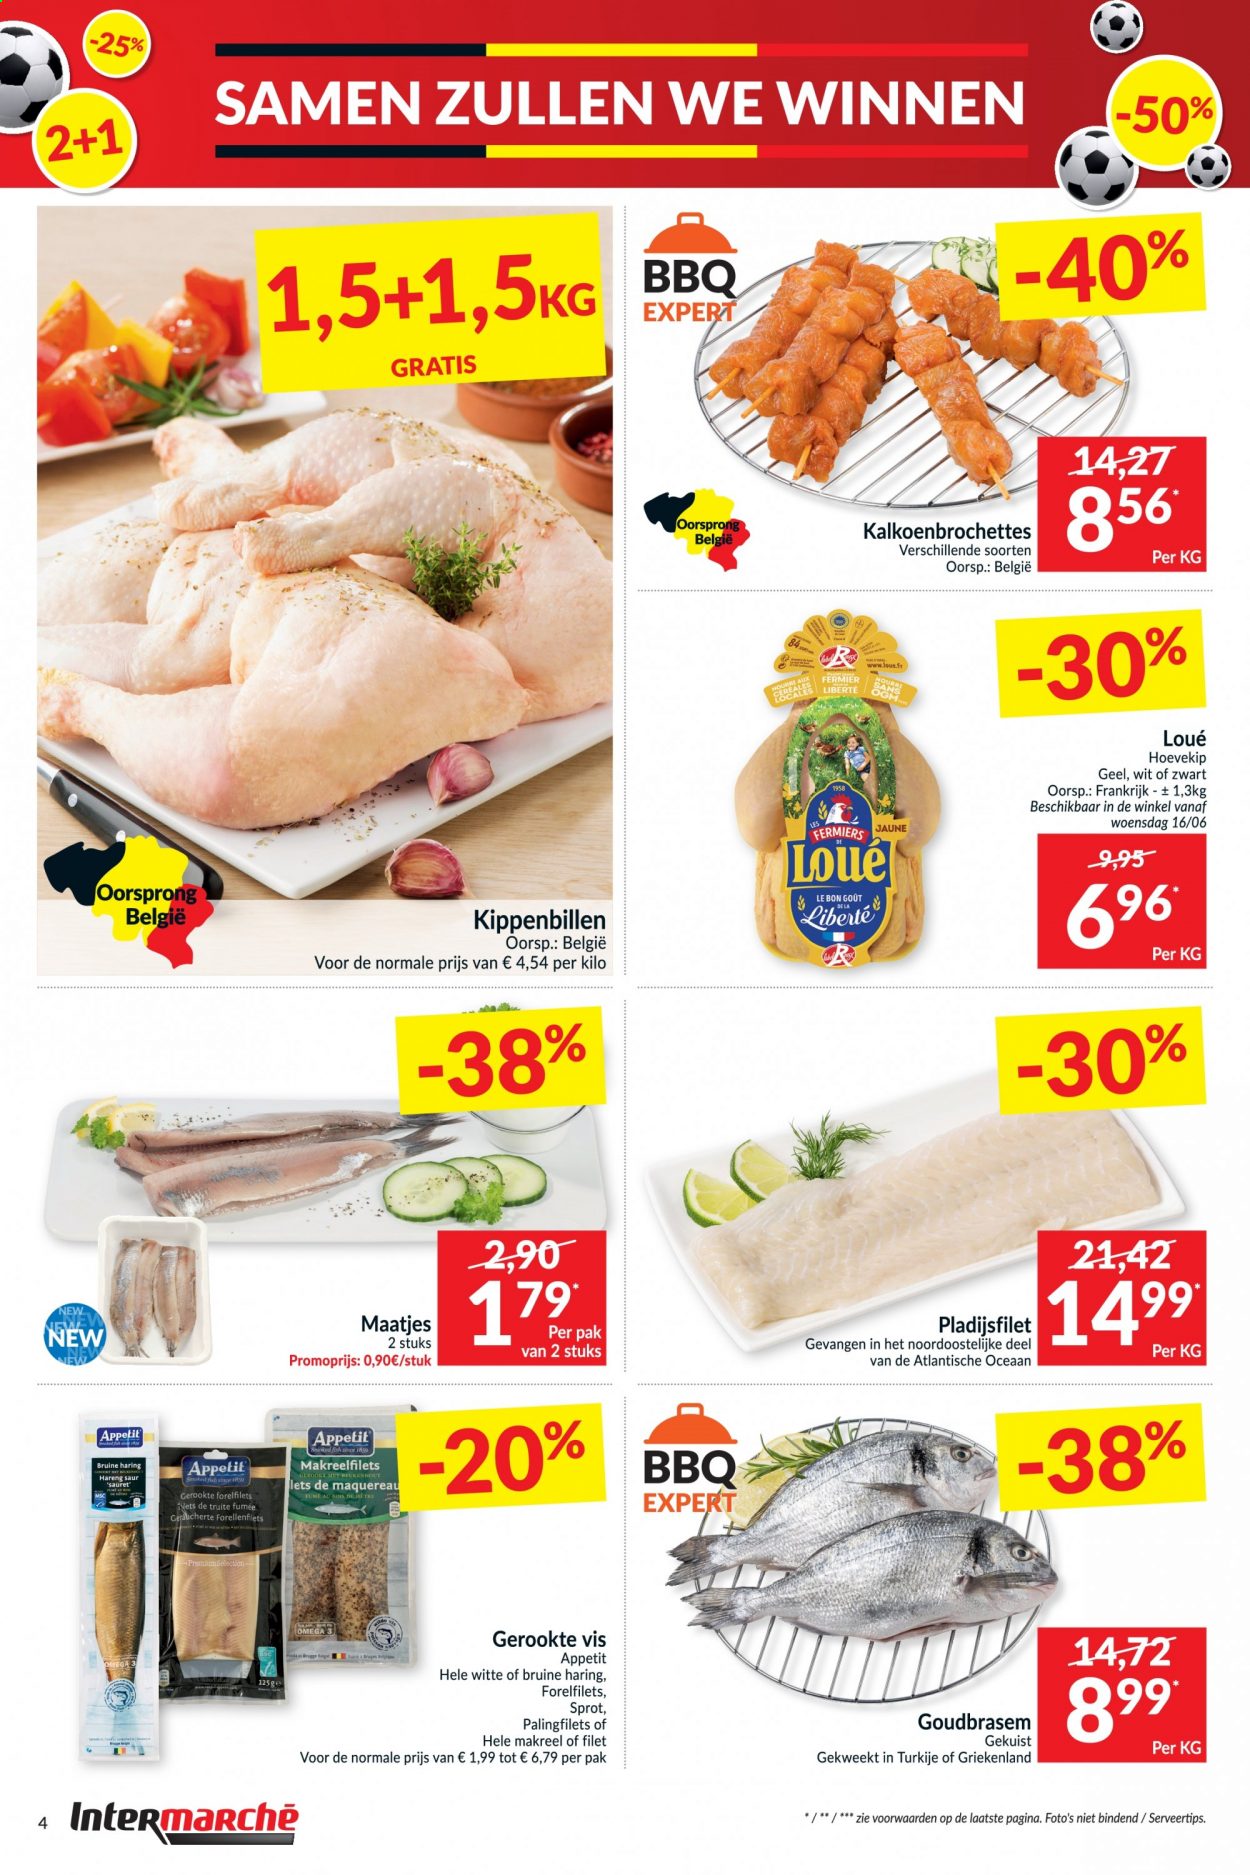 thumbnail - Intermarché-aanbieding - 15/06/2021 - 20/06/2021 -  producten in de aanbieding - makreel, omega 3, BBQ. Pagina 4.